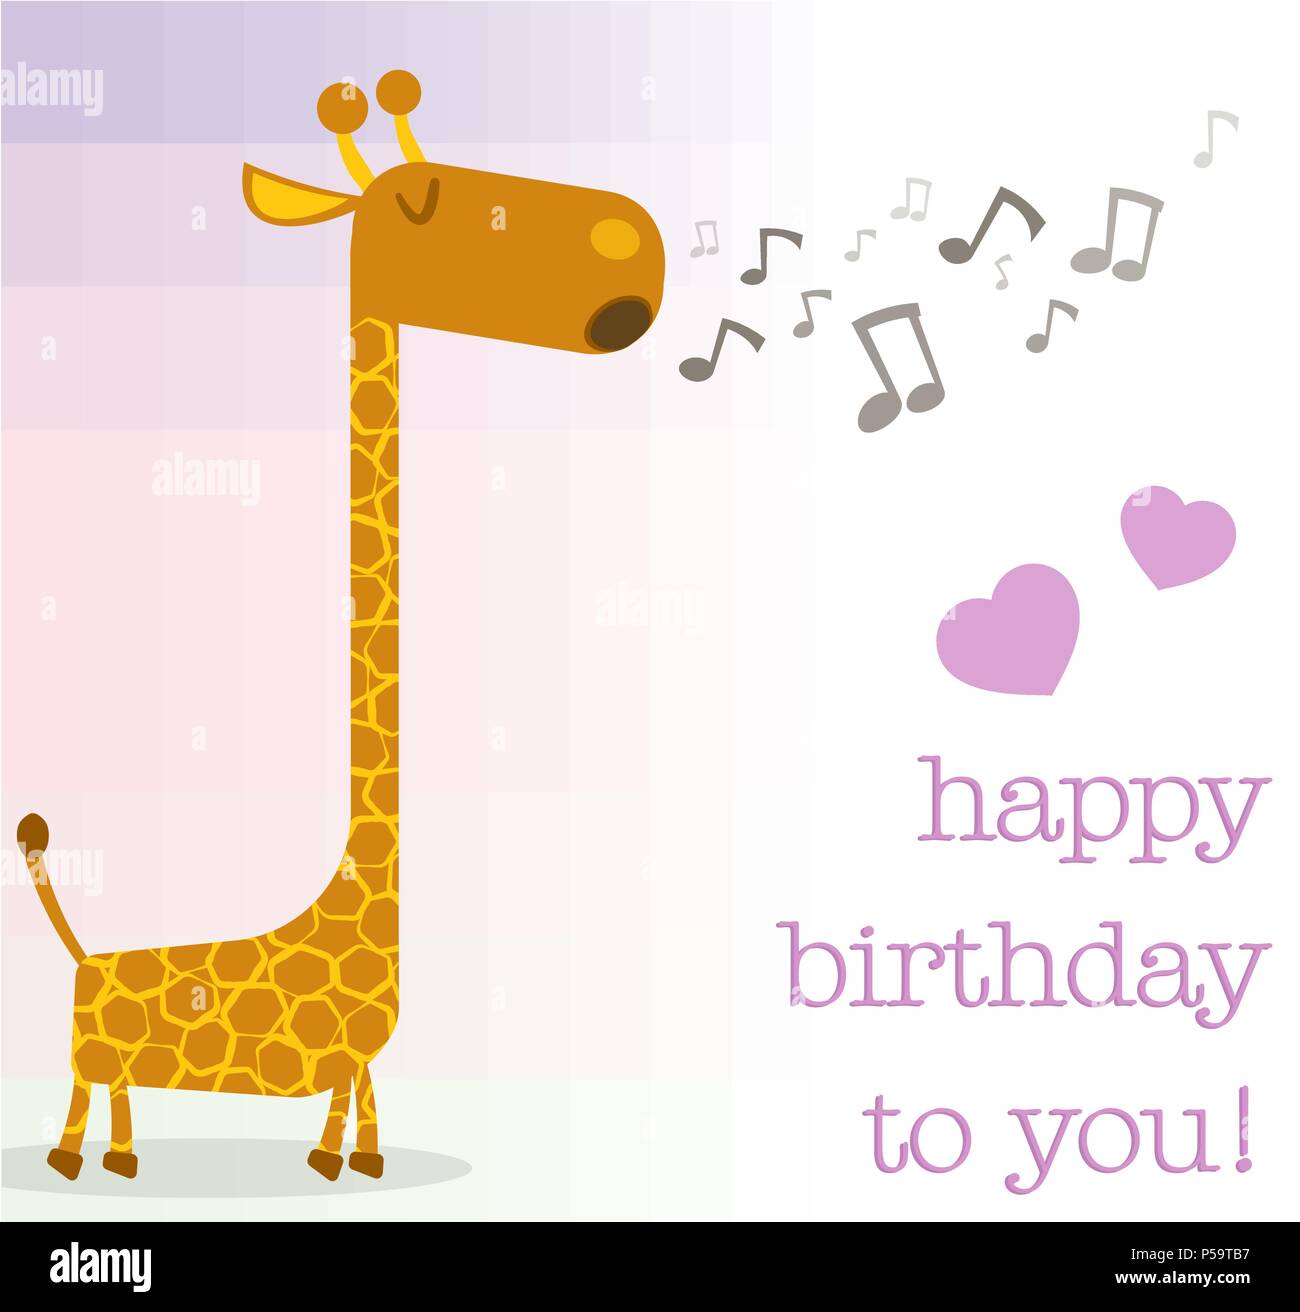 happy birthday greeting card with singing giraffe illustration Stock Vector